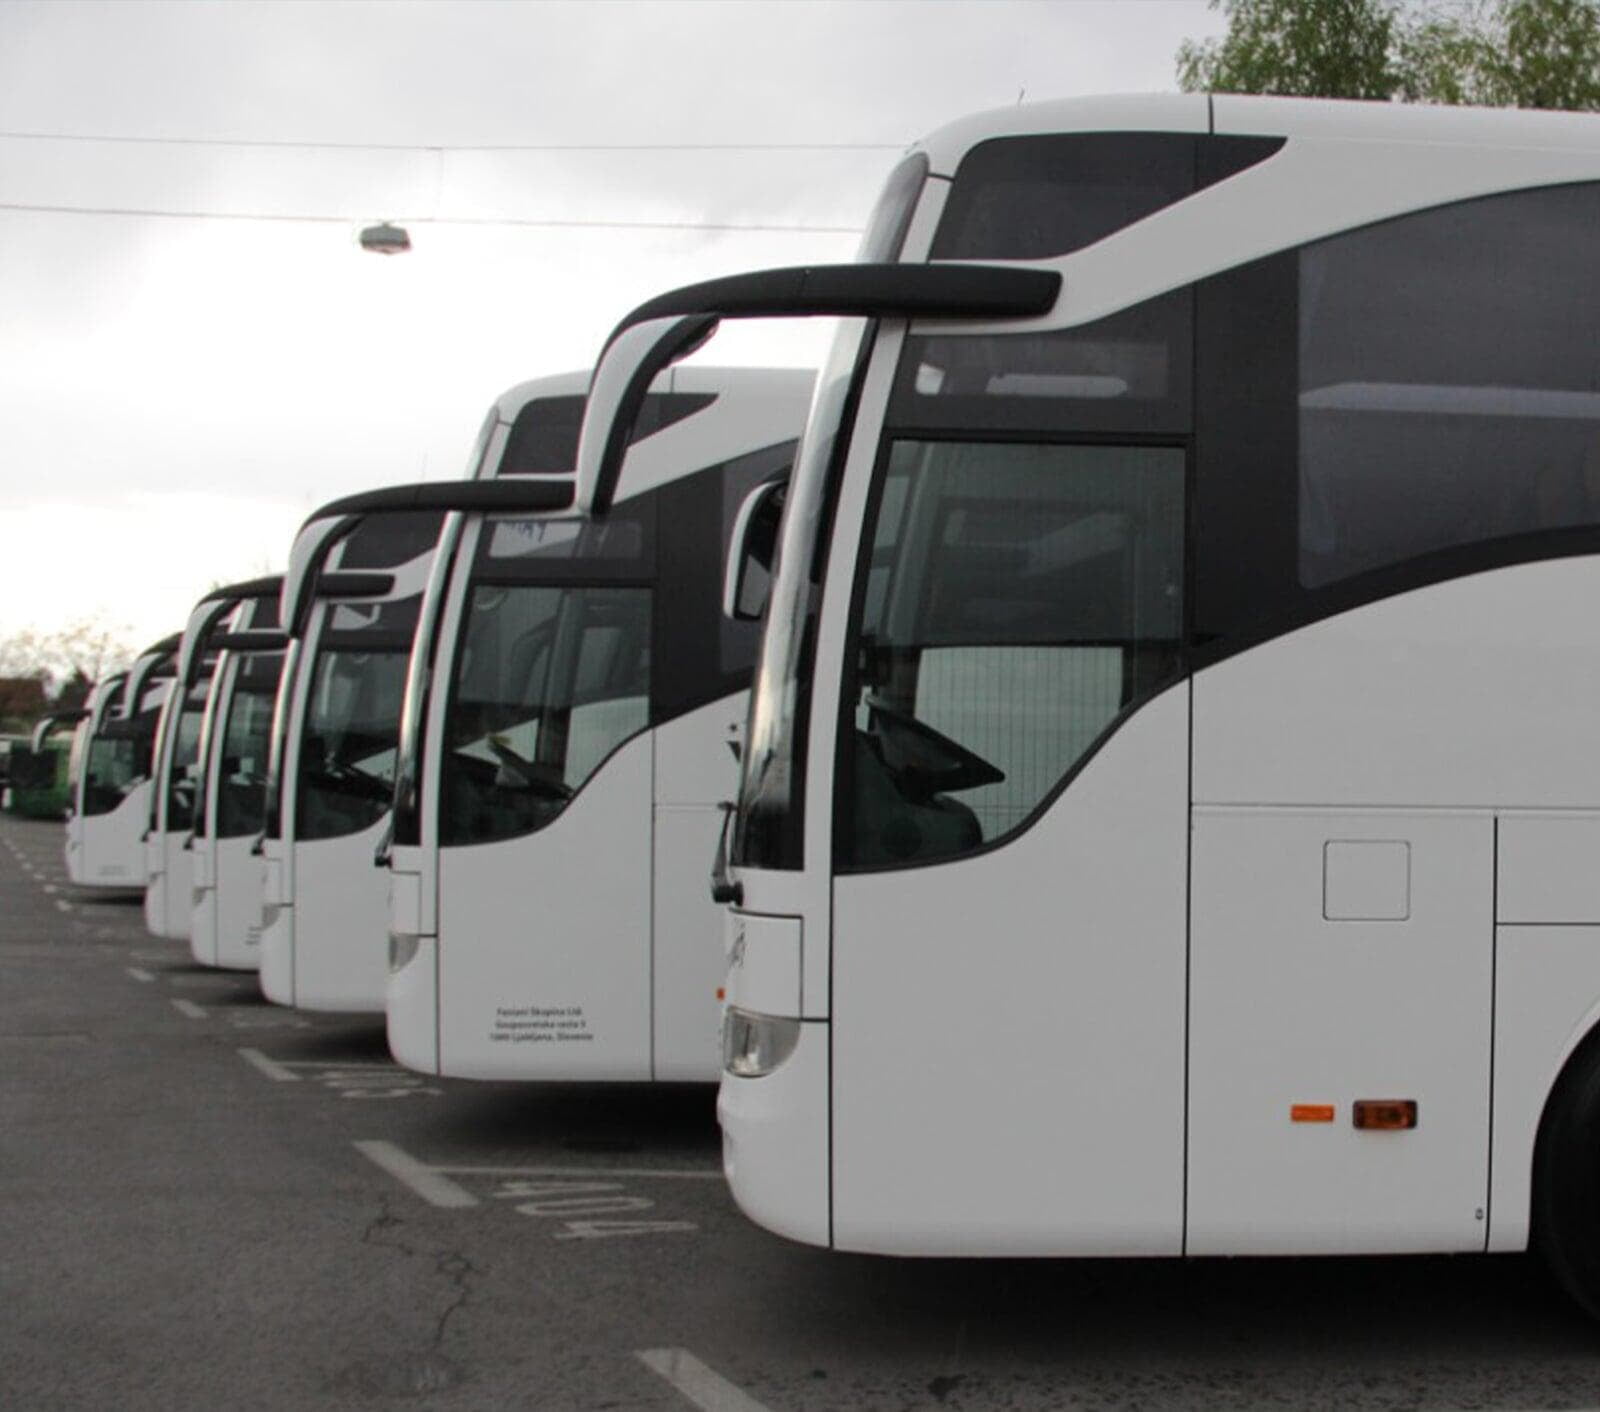 Fleet of Faniani Coaches buses